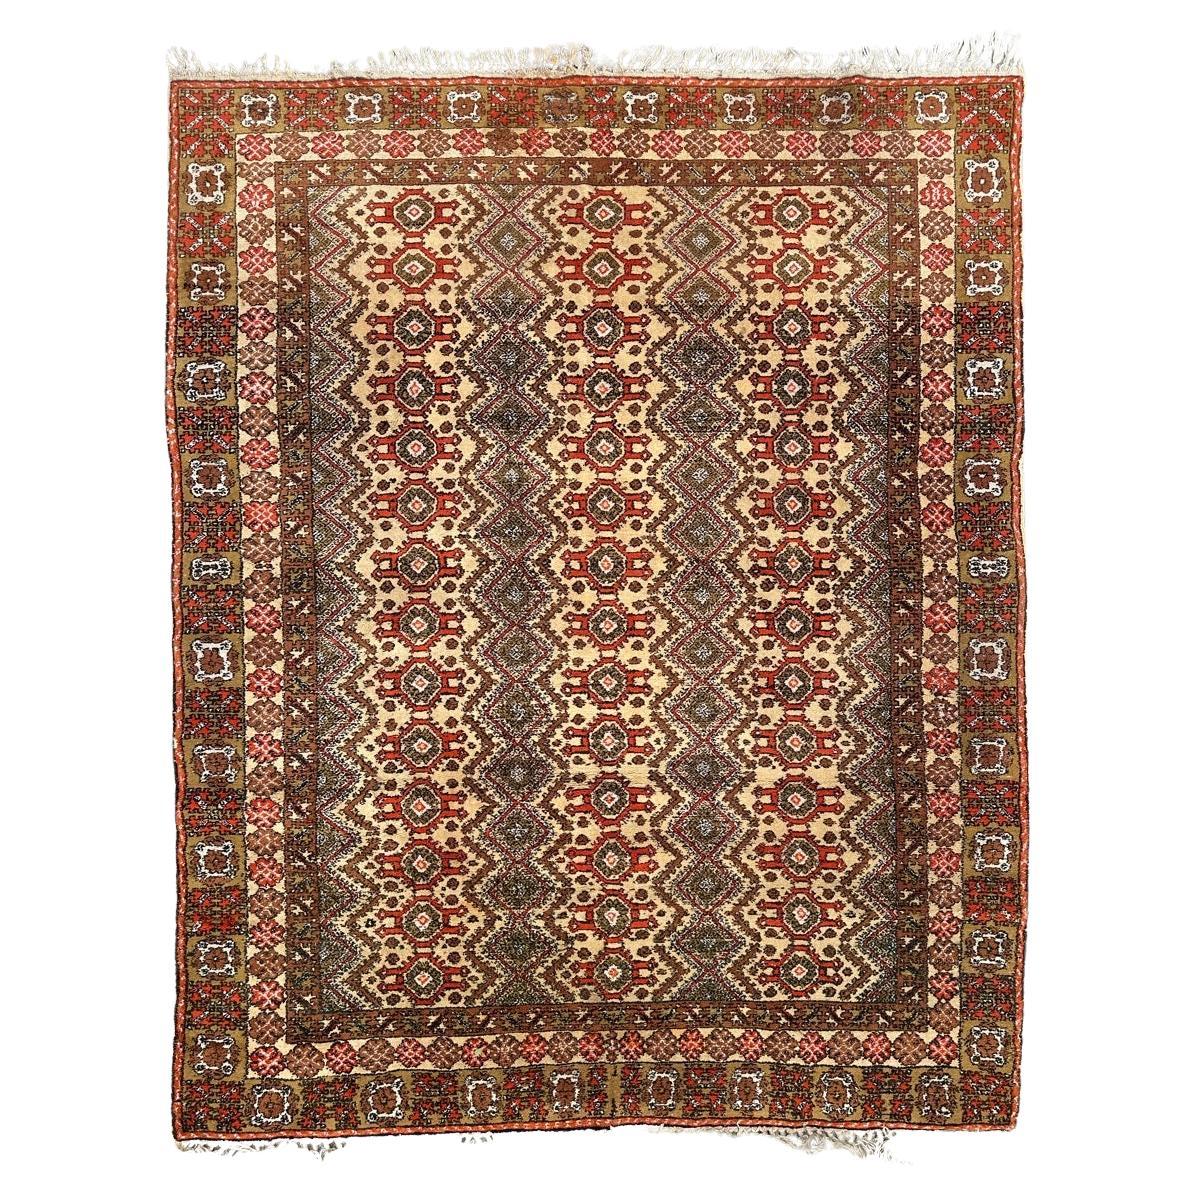 Pretty mid century Moroccan tribal rug